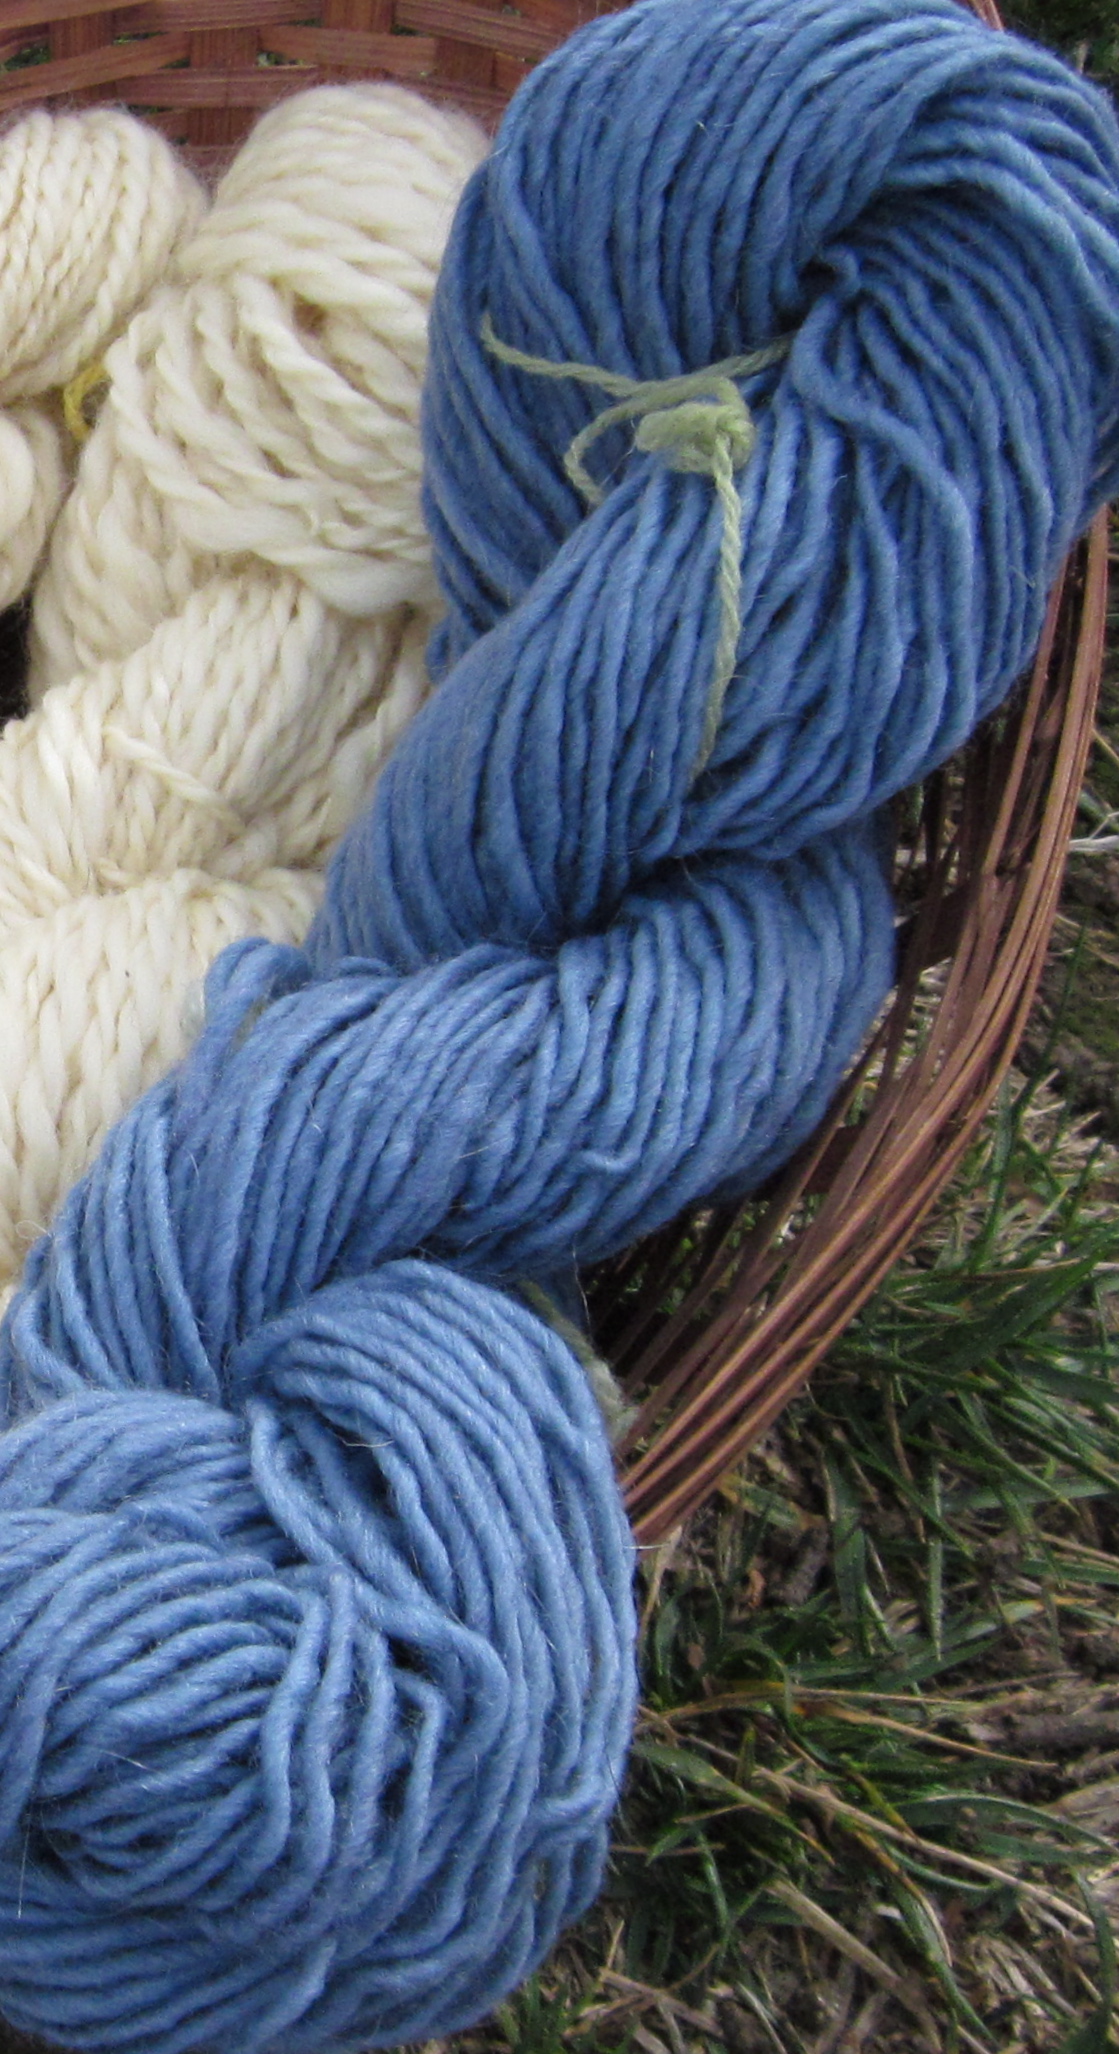 Natural dye tutorial: blue yarn from black beans!